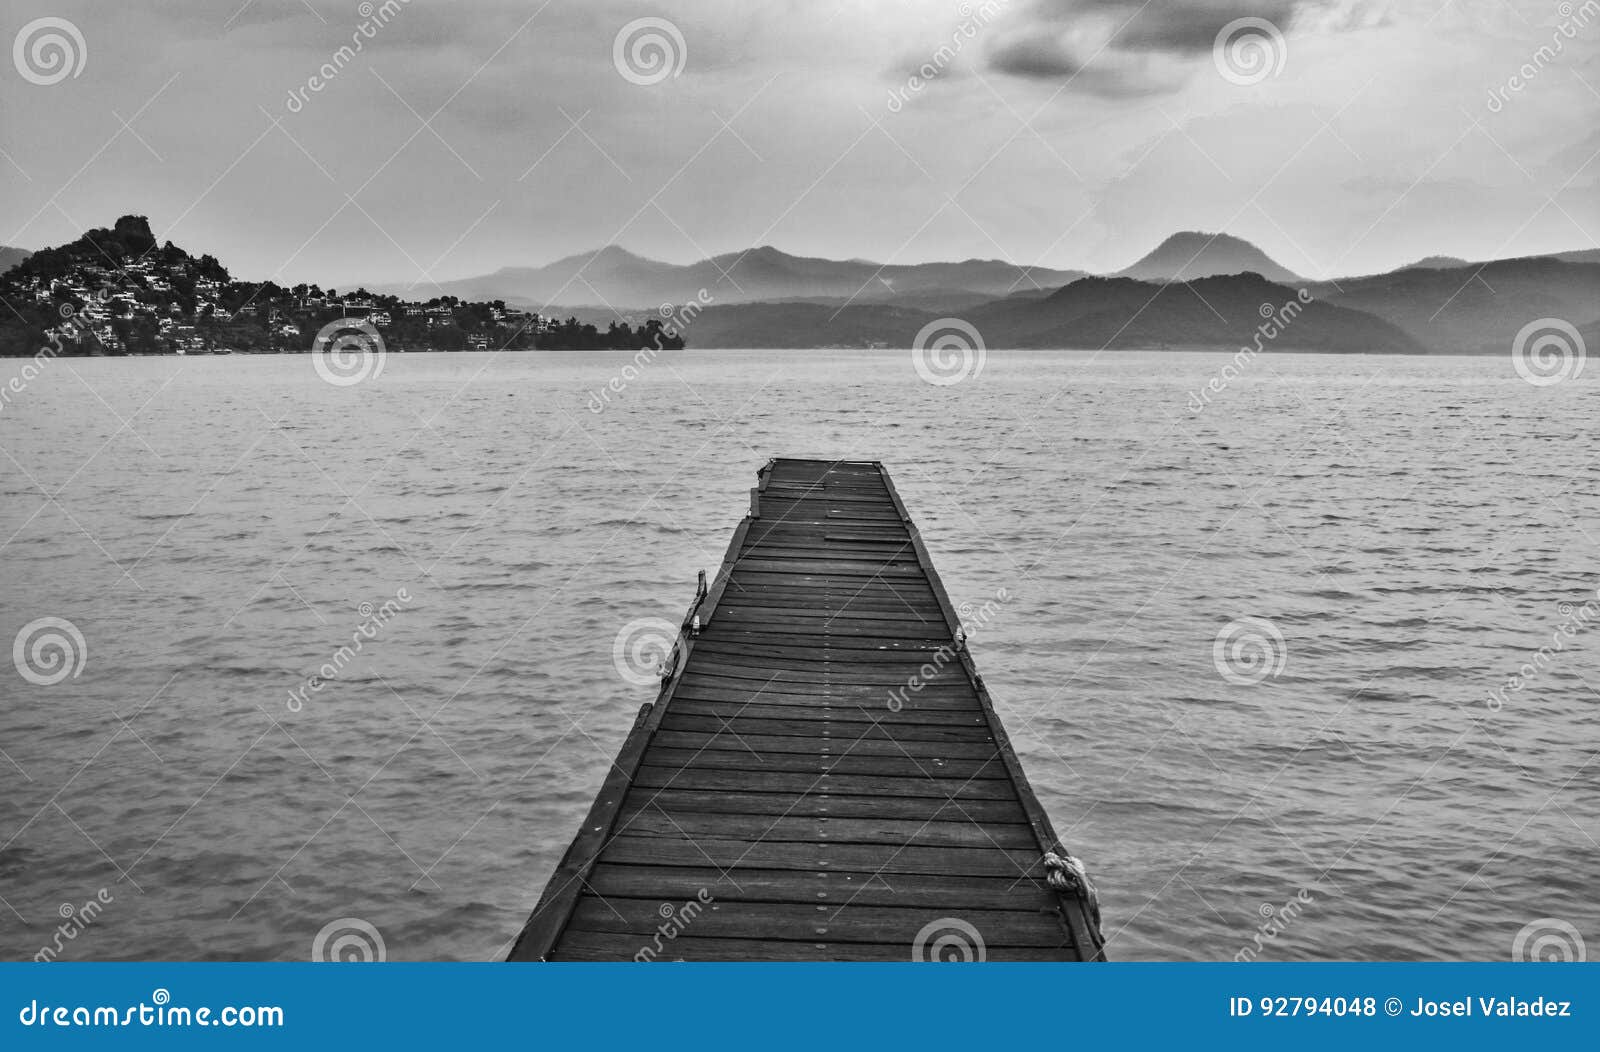 lake and dock